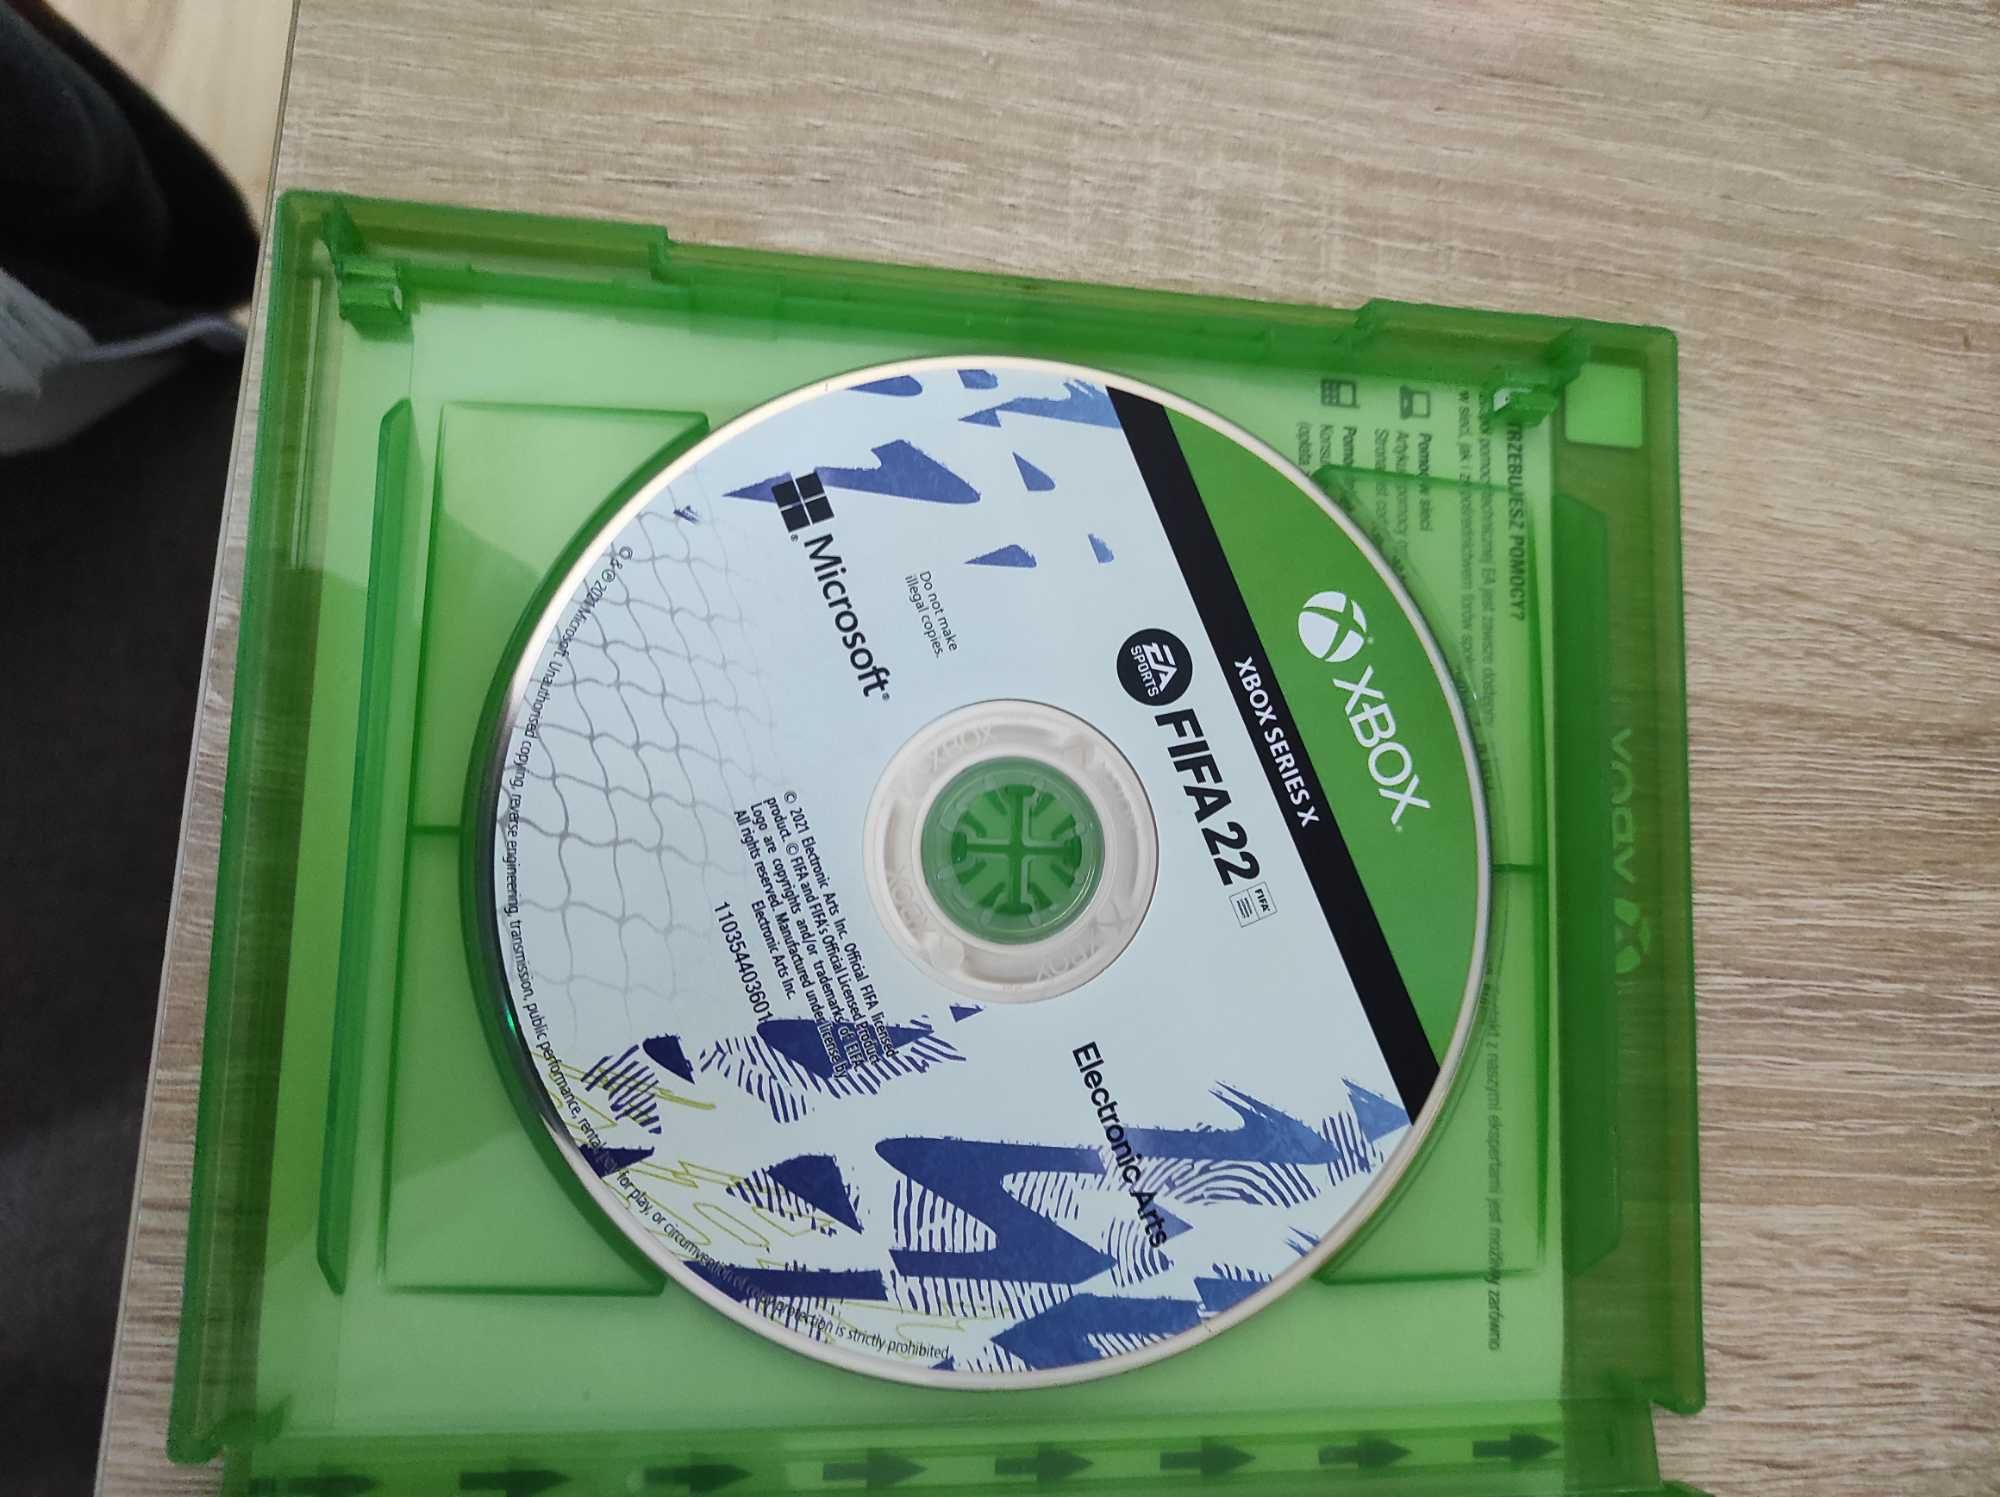 FIFA 22 Xbox Series X